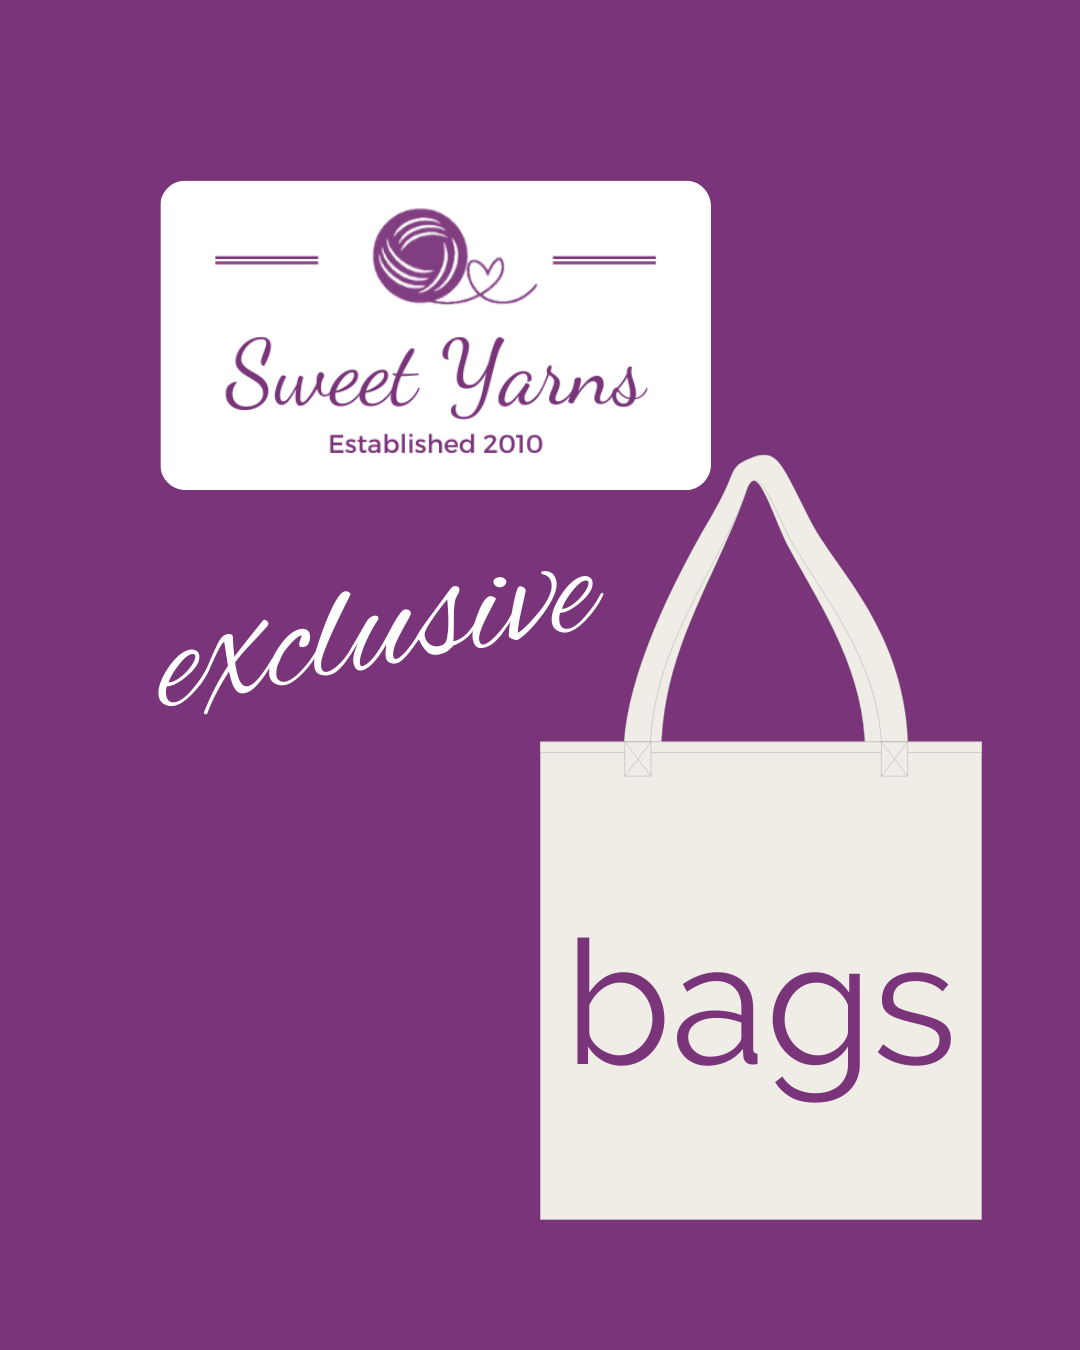 Sweet Yarns' Bags